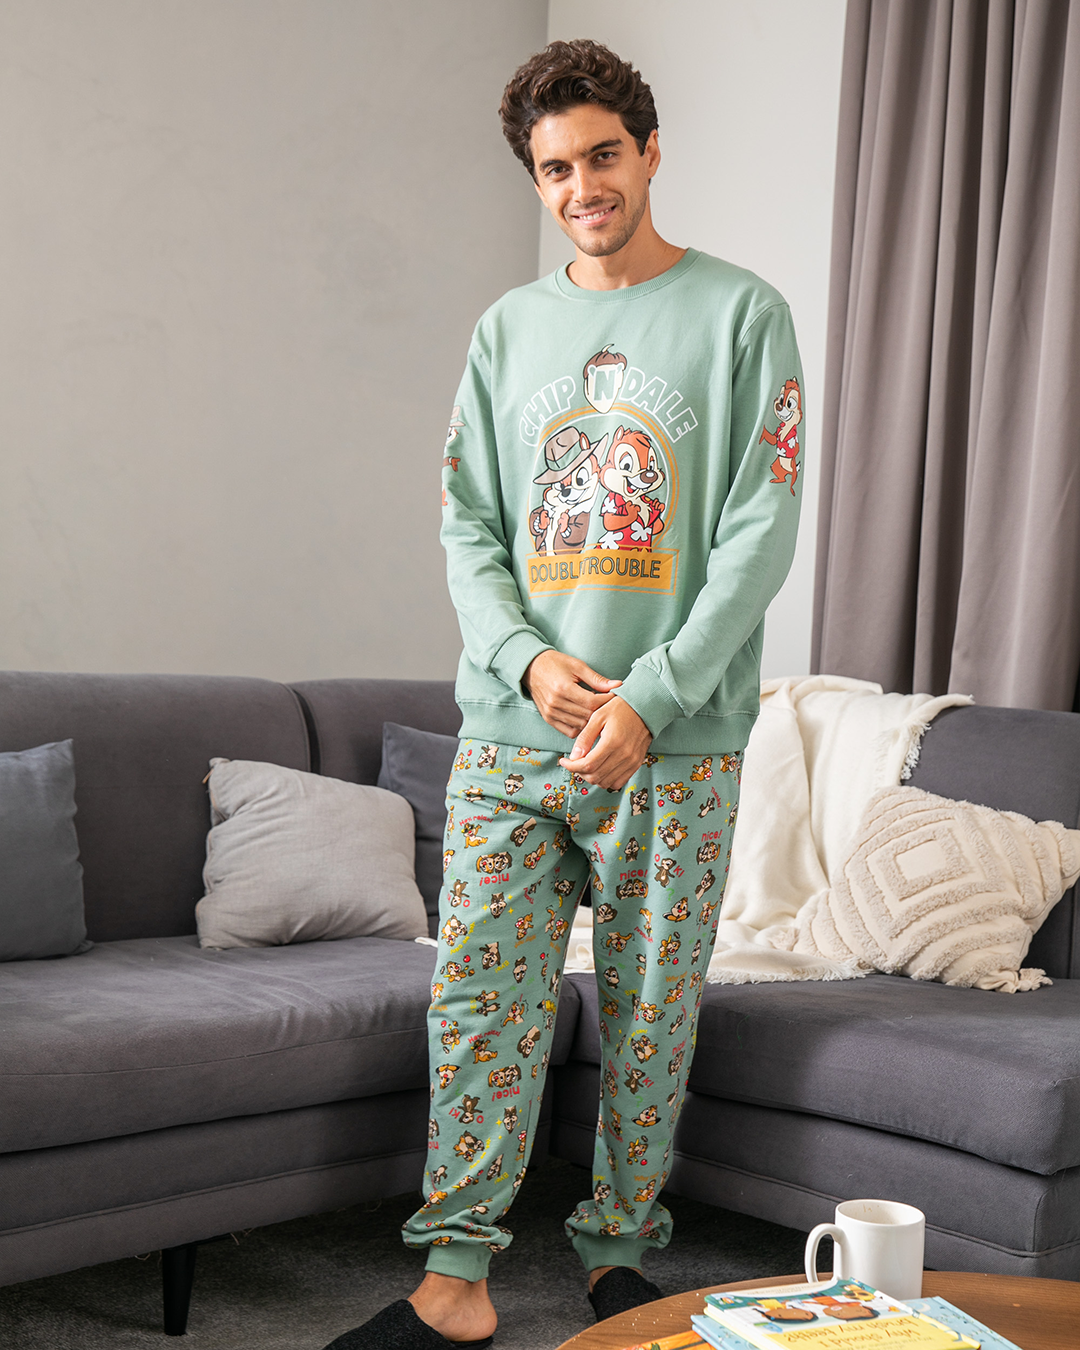 Squirrel men's pajamas